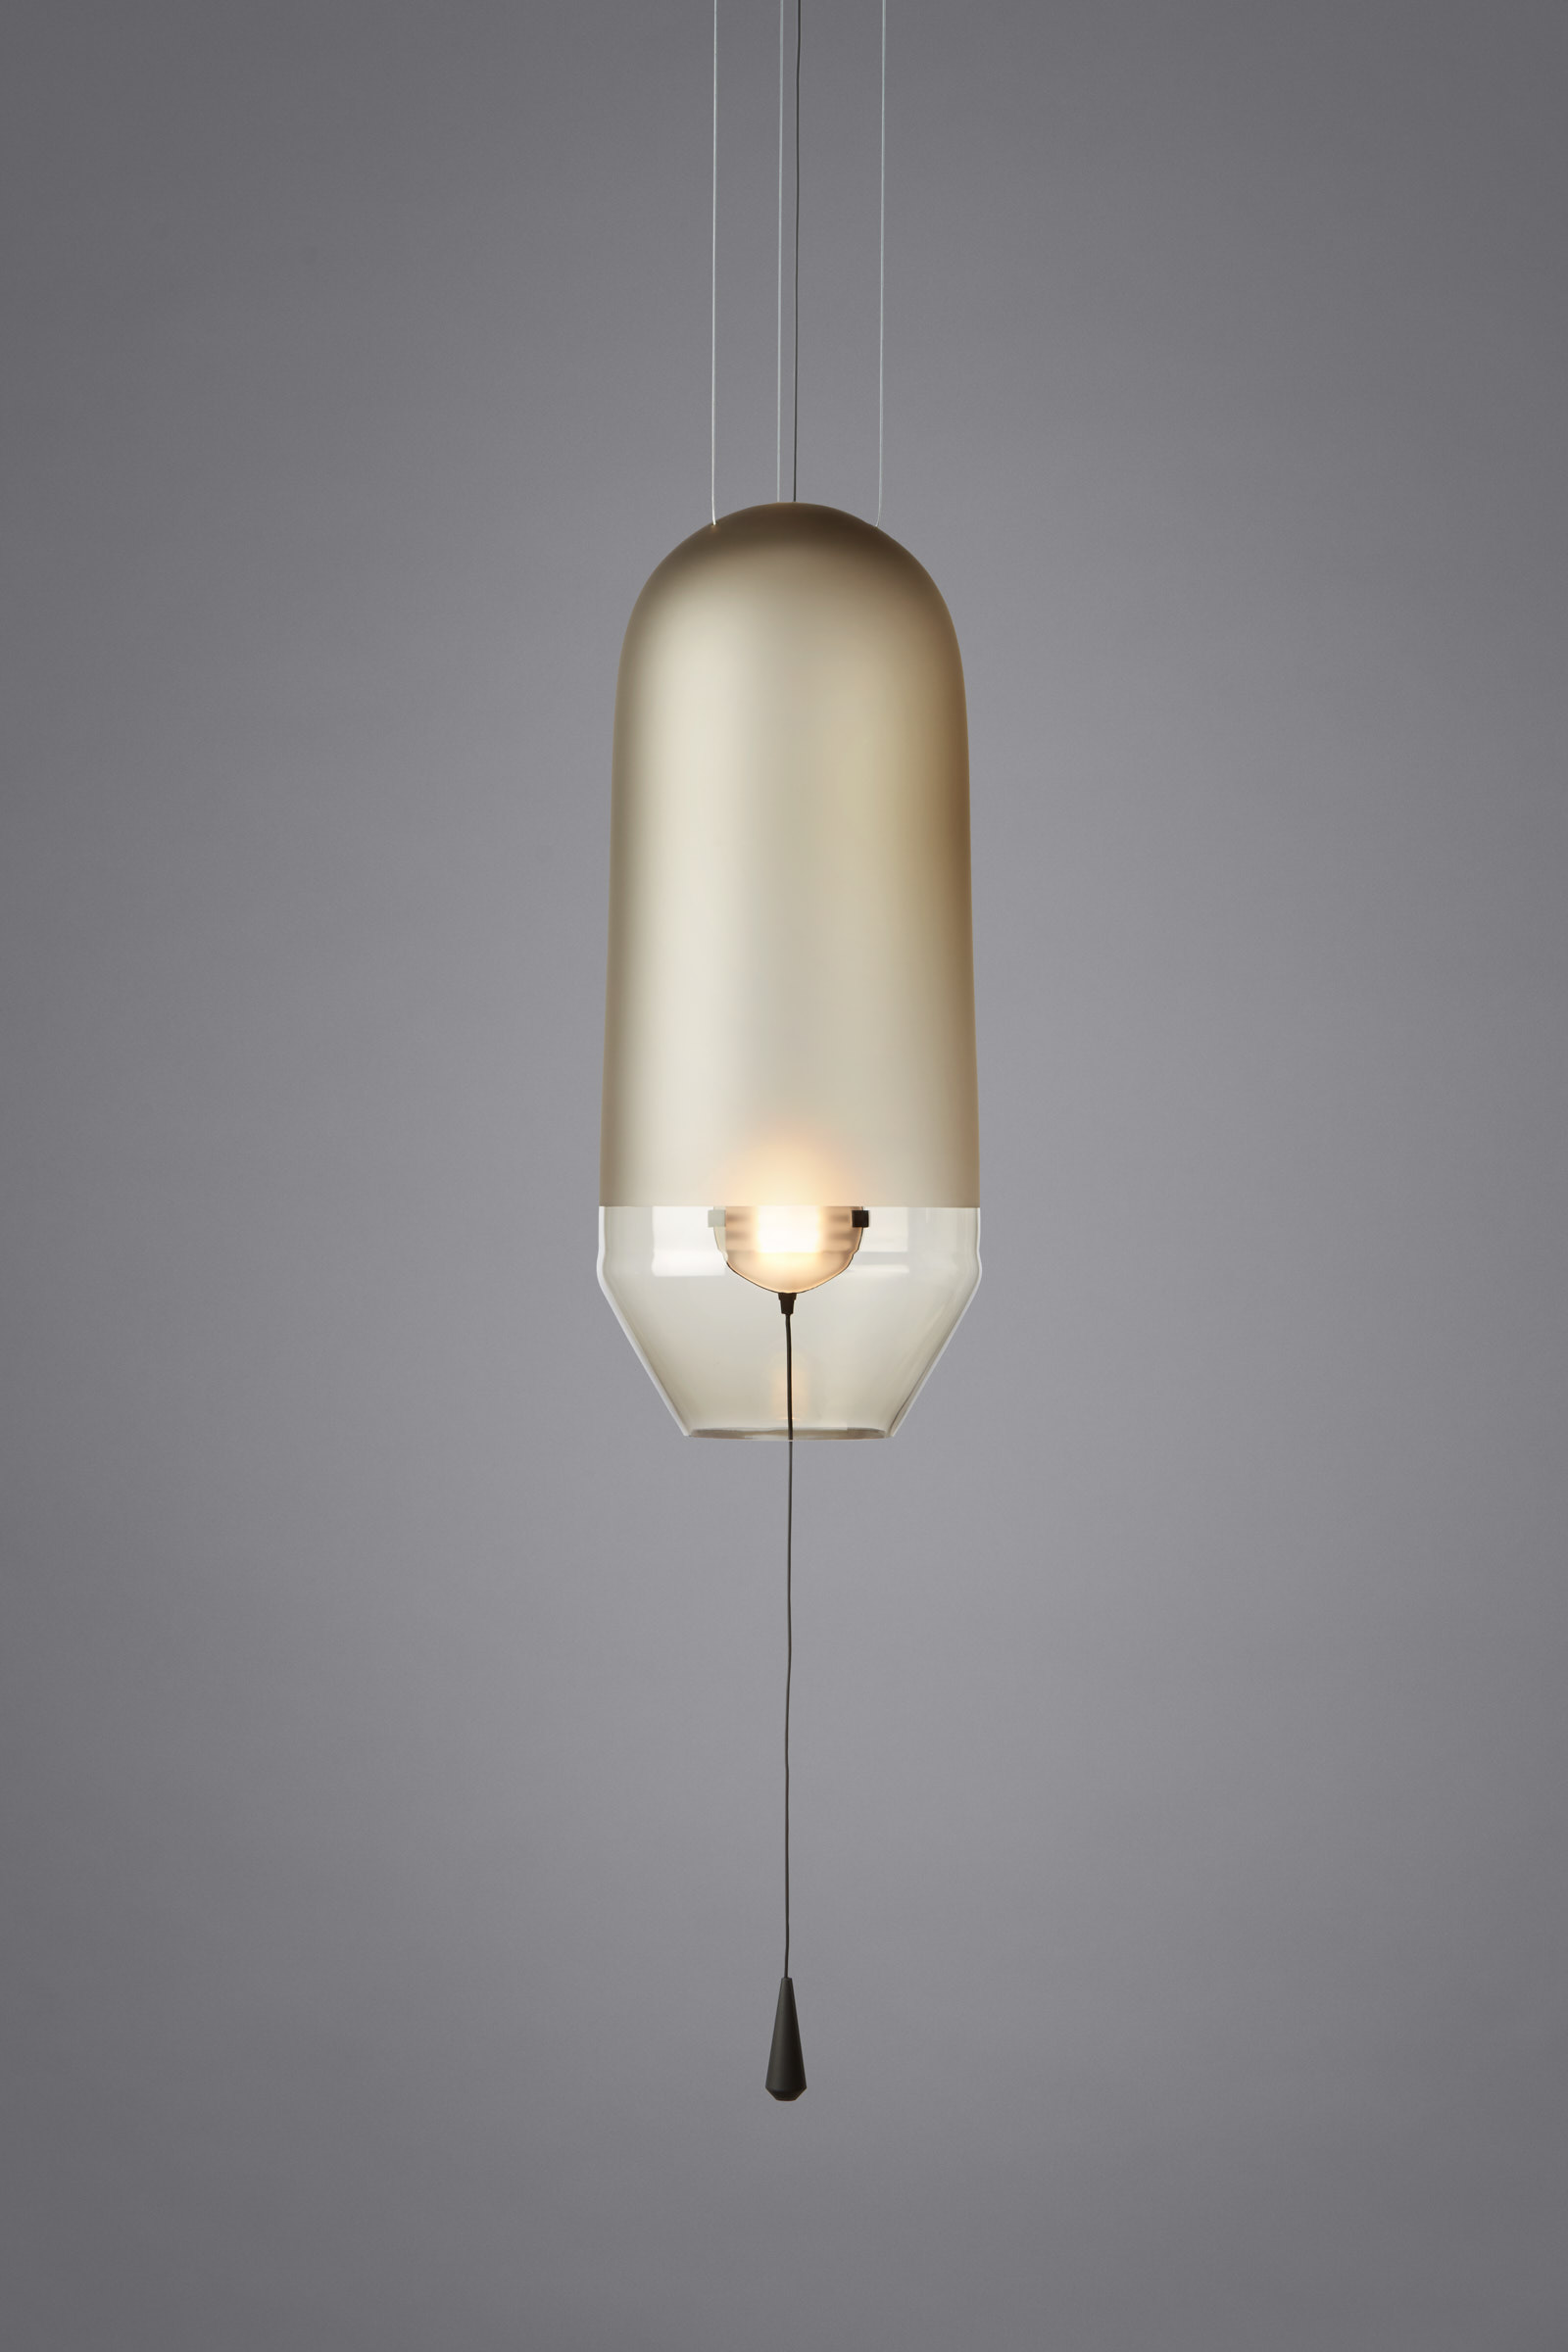 Product - VANTOT - Design Studio - Interior design - Hollands licht - Limpid Lights